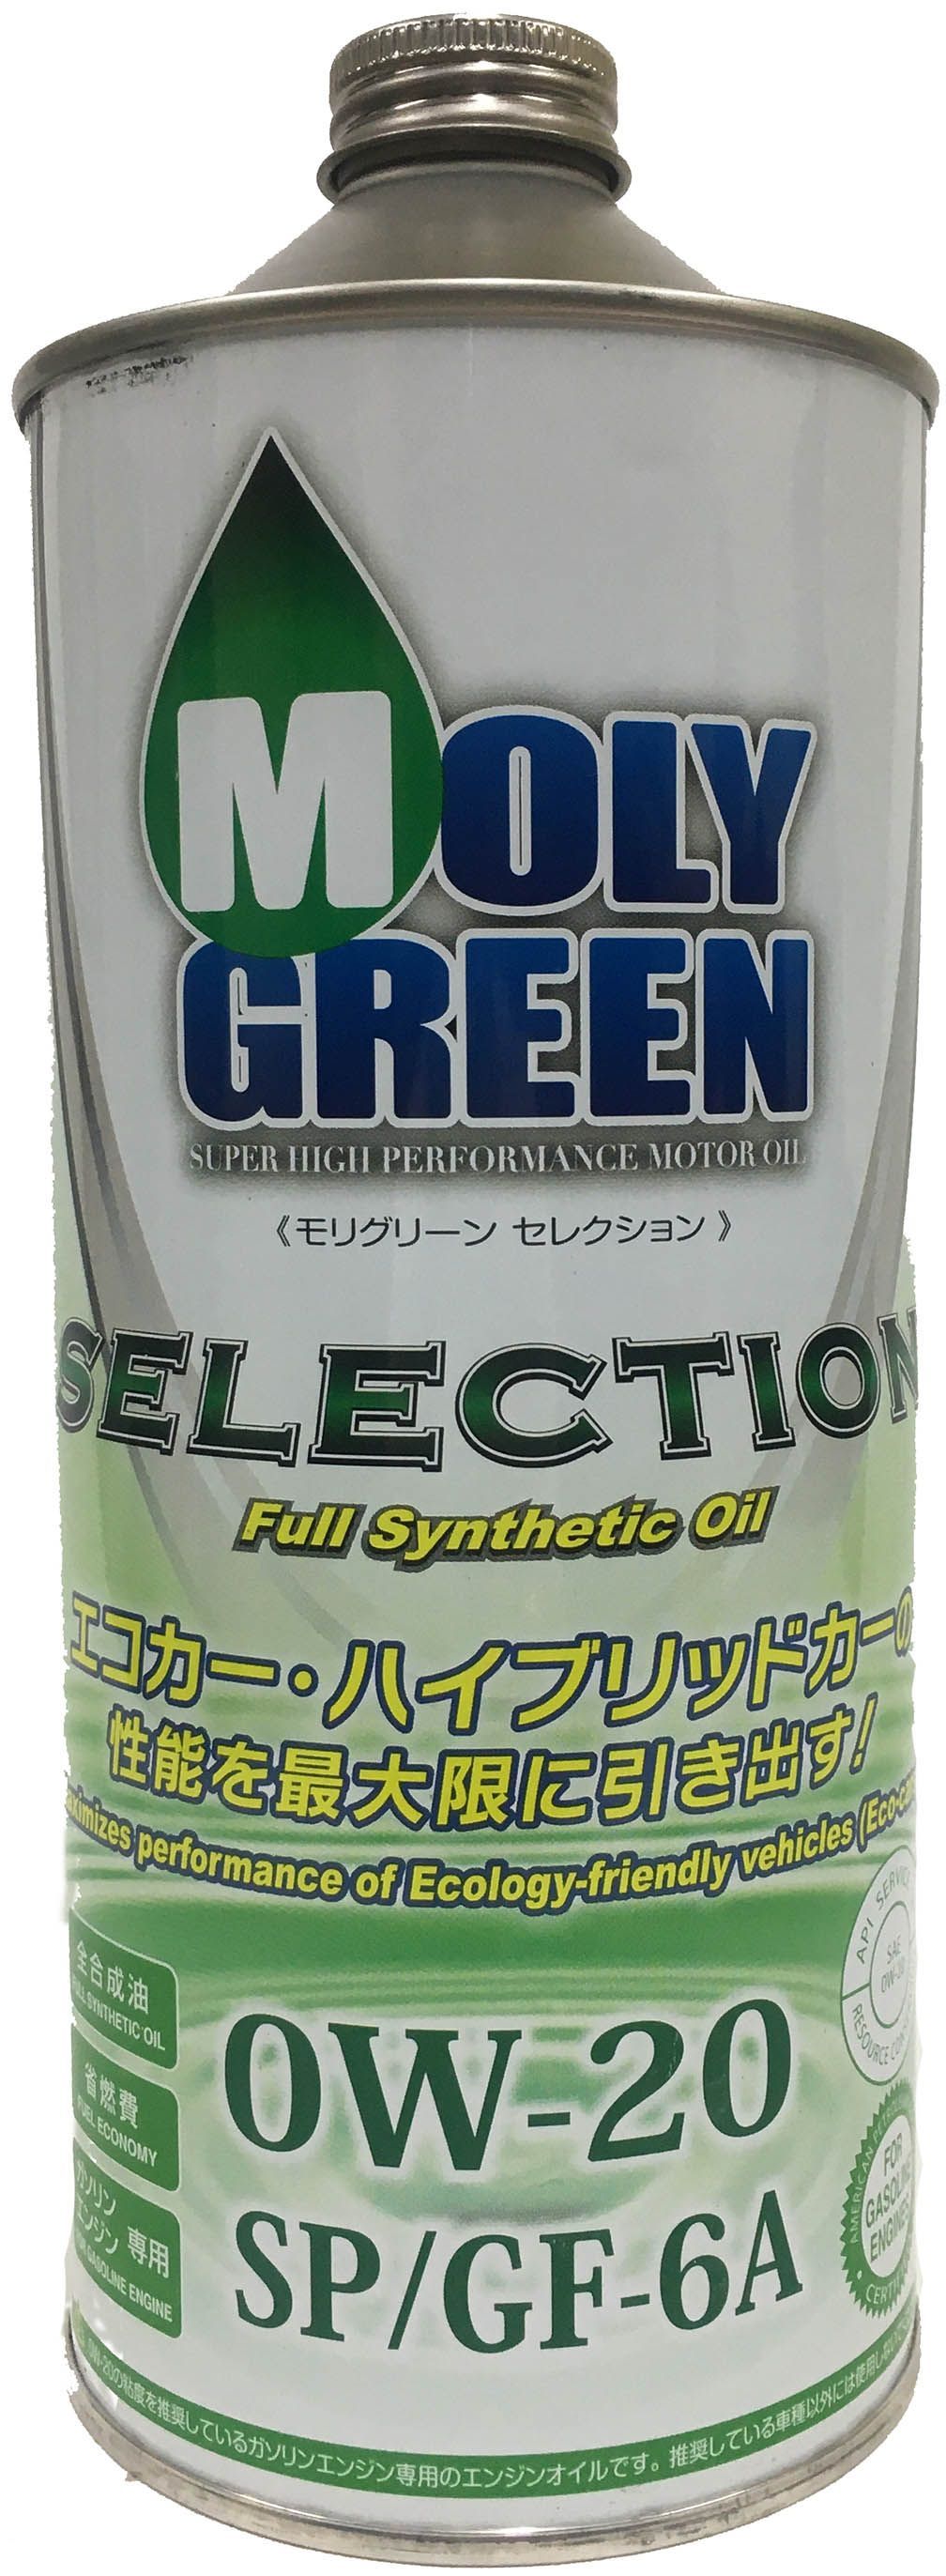 Moly green 0w 20. Моли Грин 0 в 20. Масло моли Грин 0w20. Moly Green 0w20 артикул. Moly Green Premium (Pao) SP/gf-6a 0w20 4л синт..